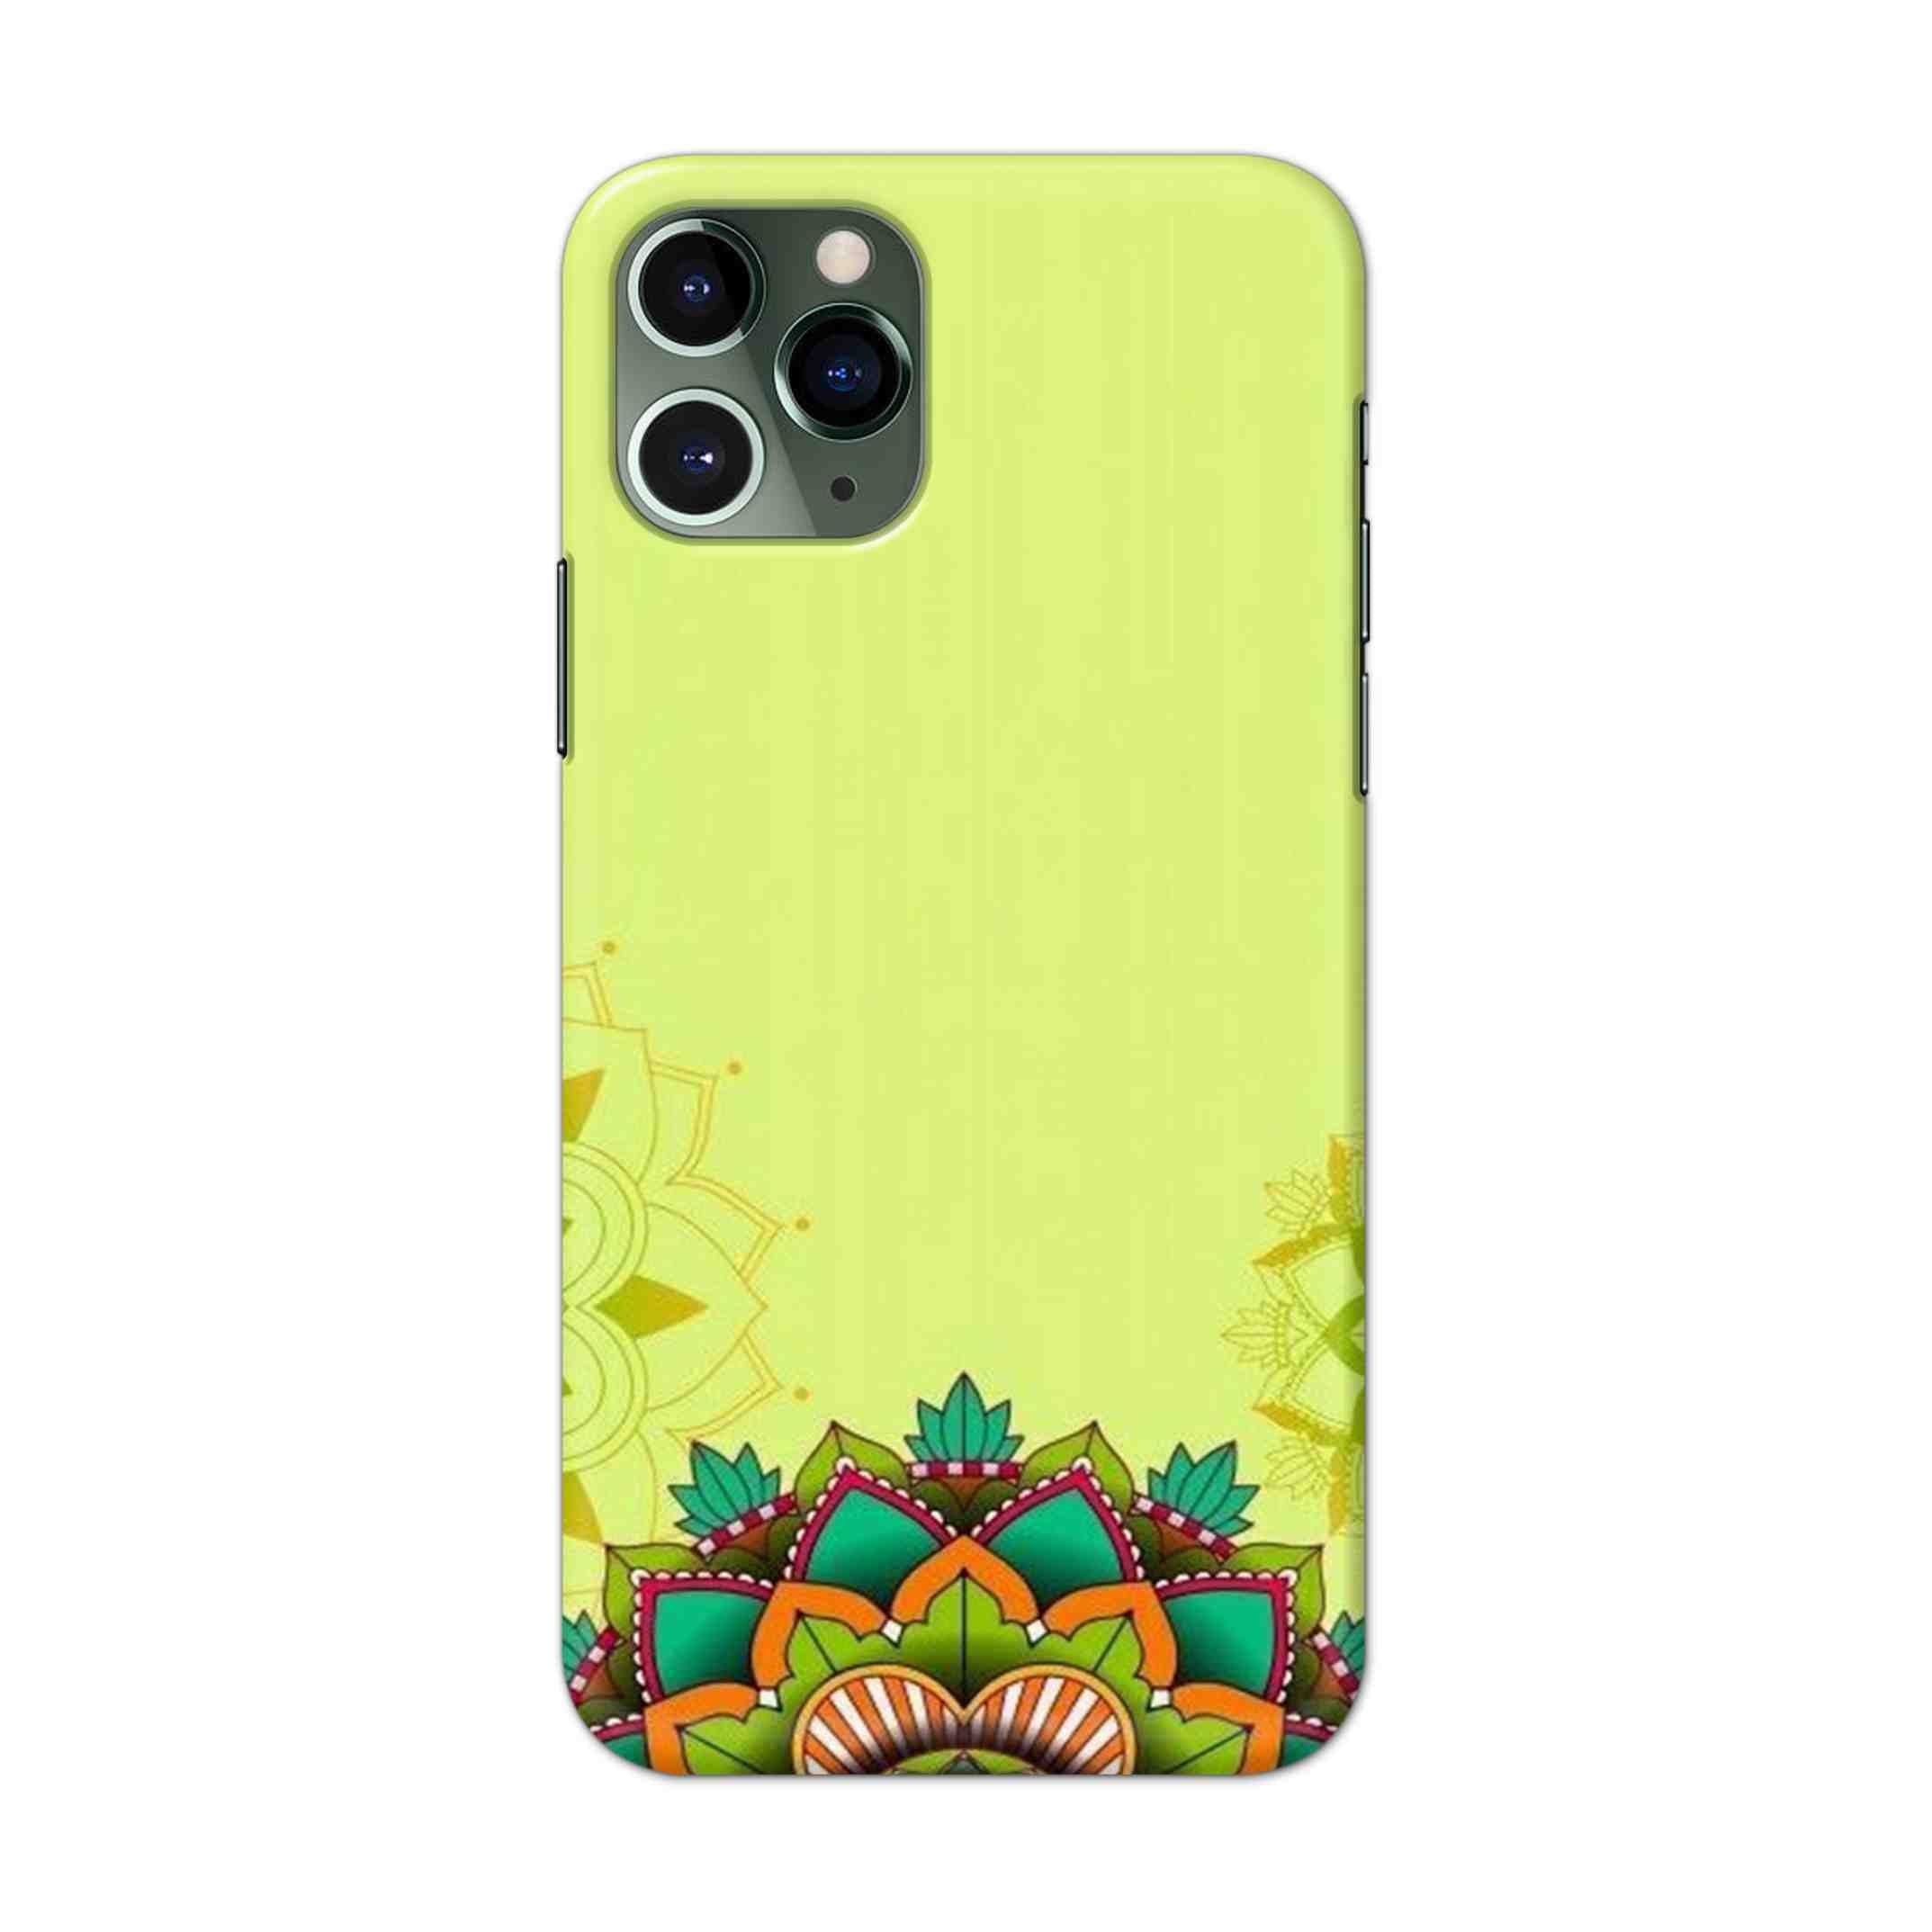 Buy Flower Mandala Hard Back Mobile Phone Case/Cover For iPhone 11 Pro Online